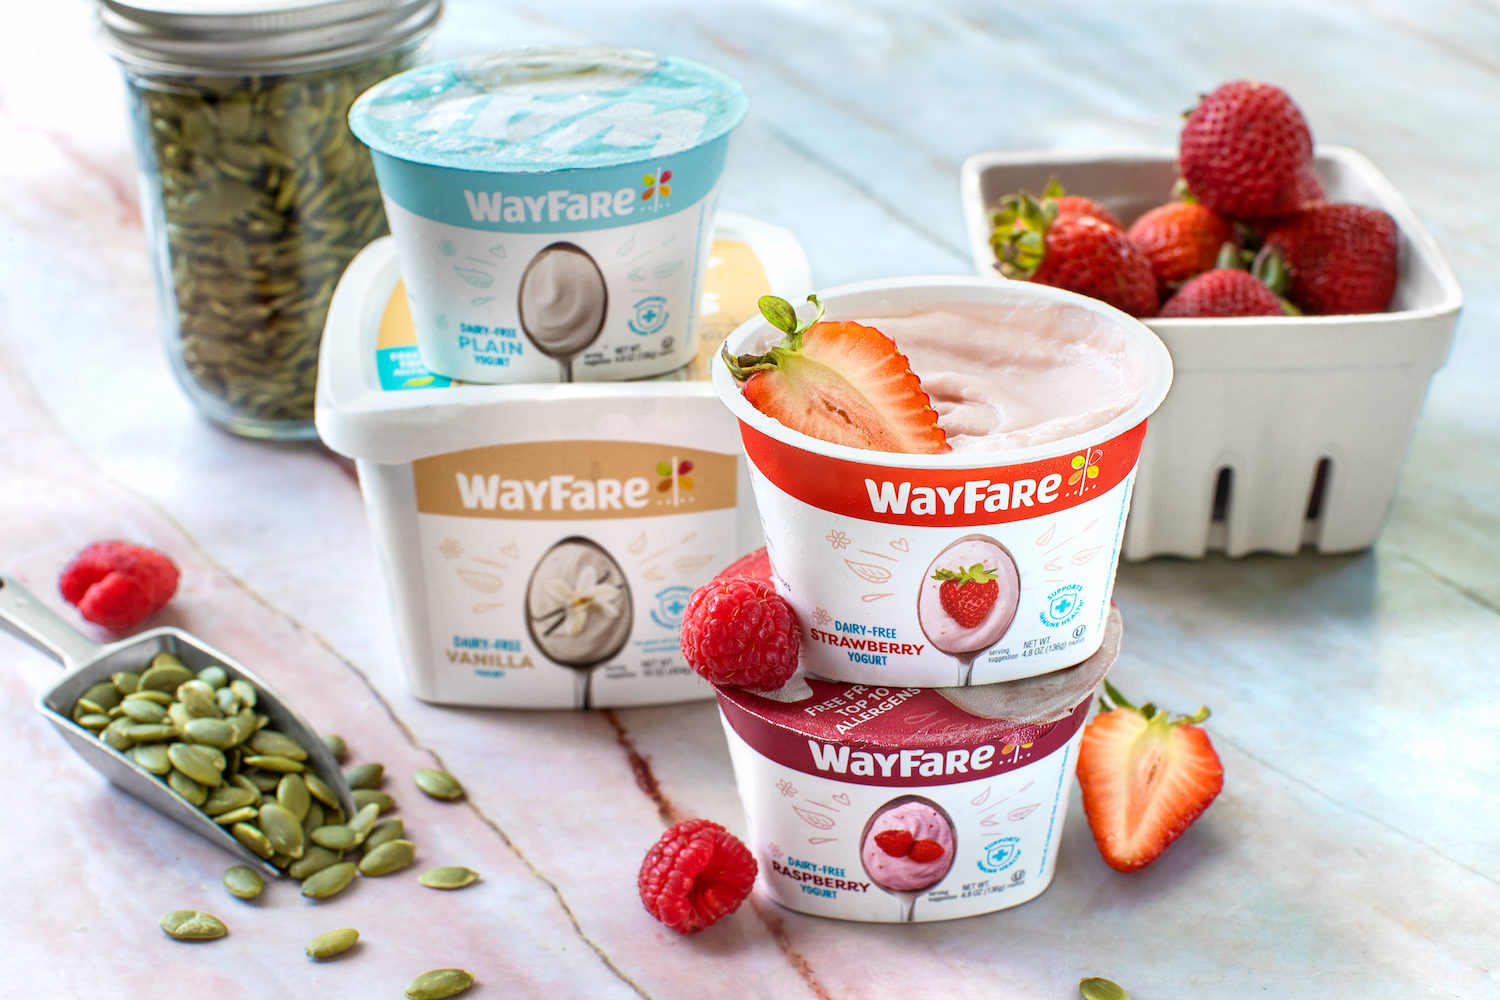 wayfare plant-based yogurt - new plant-based foods